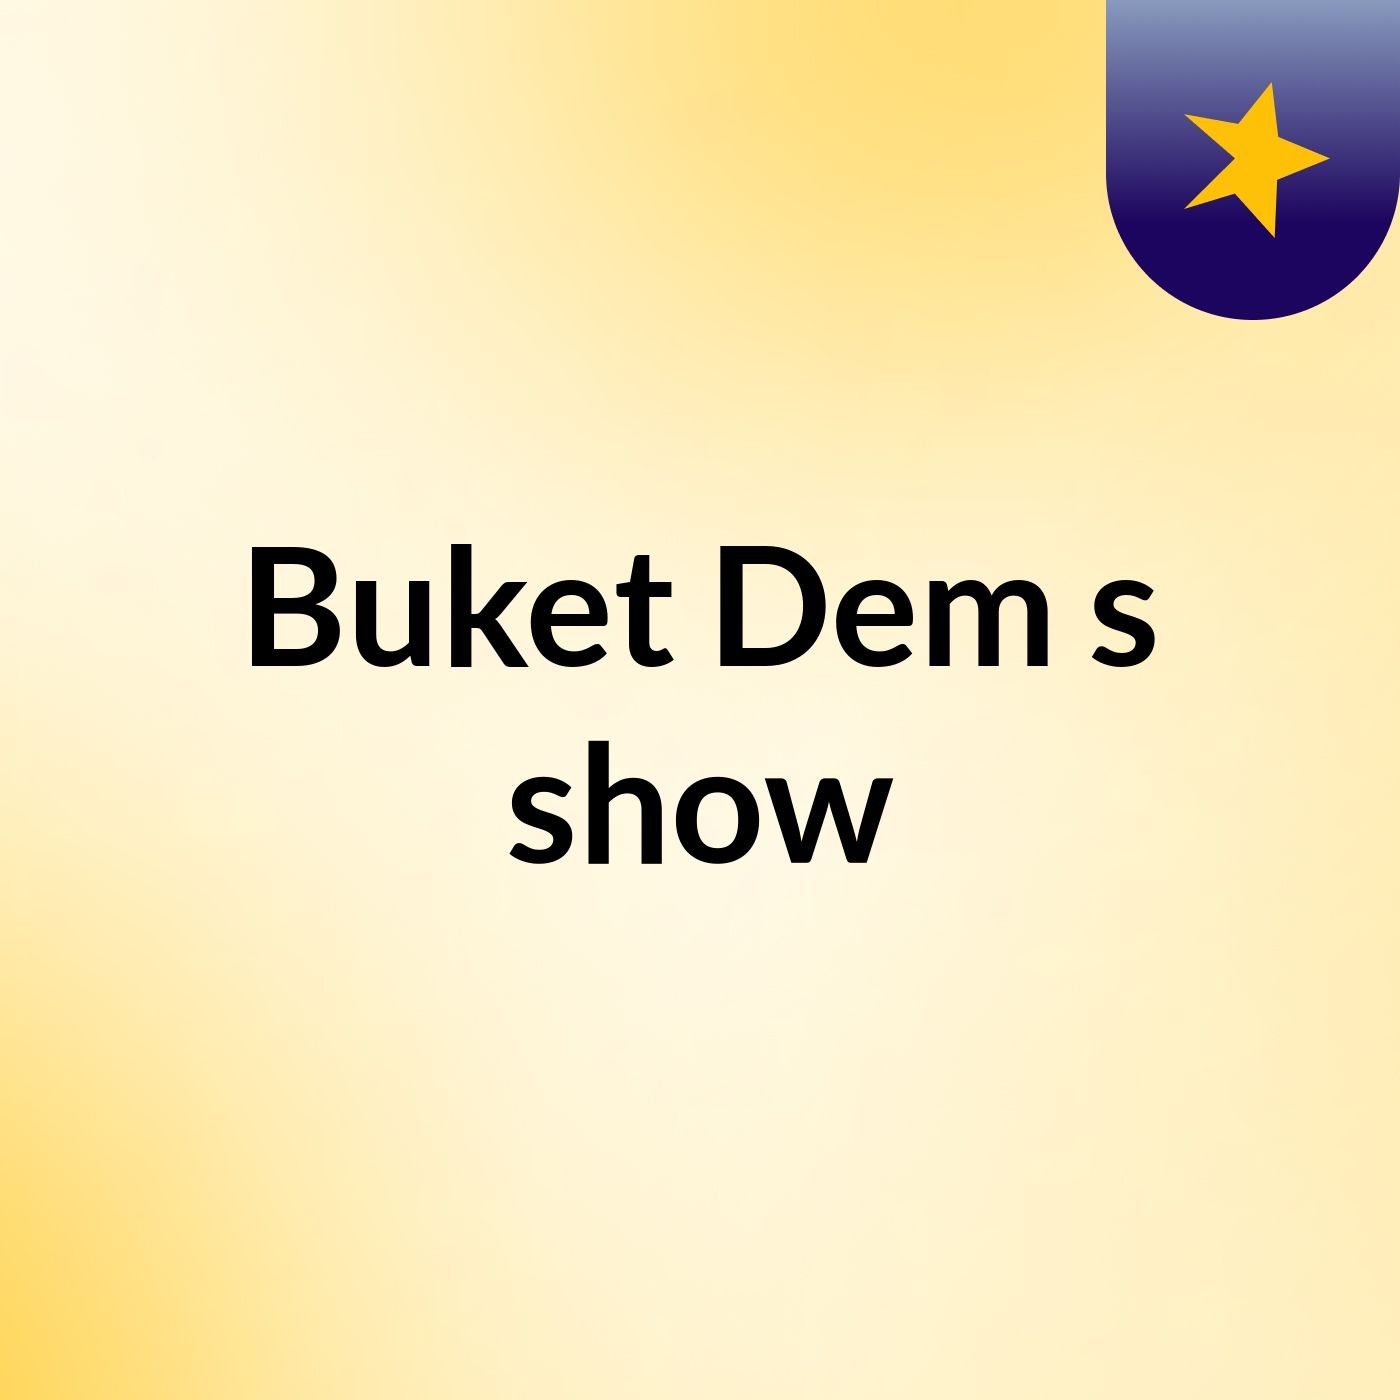 Buket Dem's show